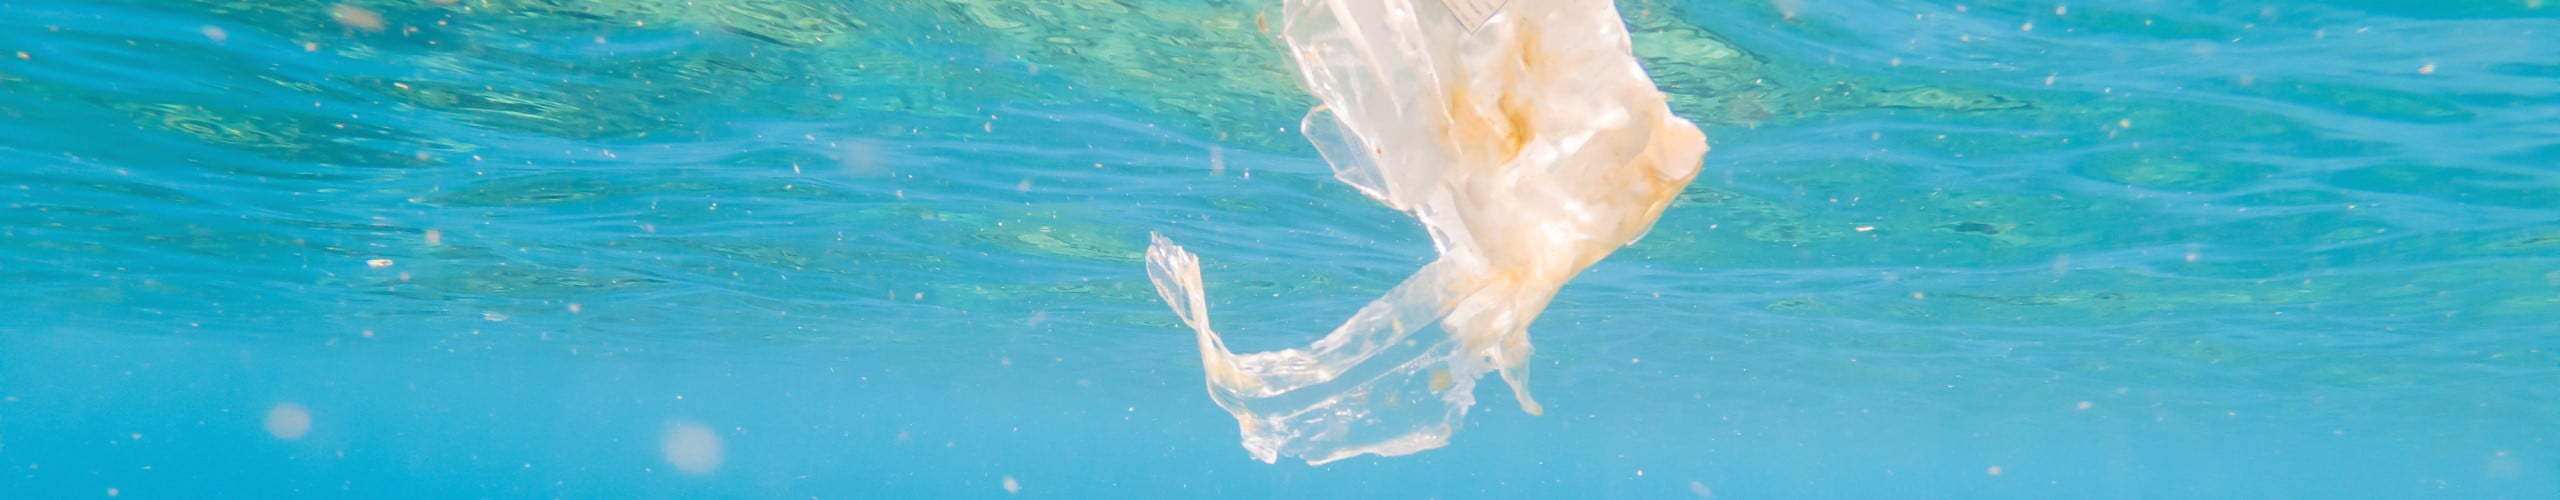 Plast og mikroplast i havet